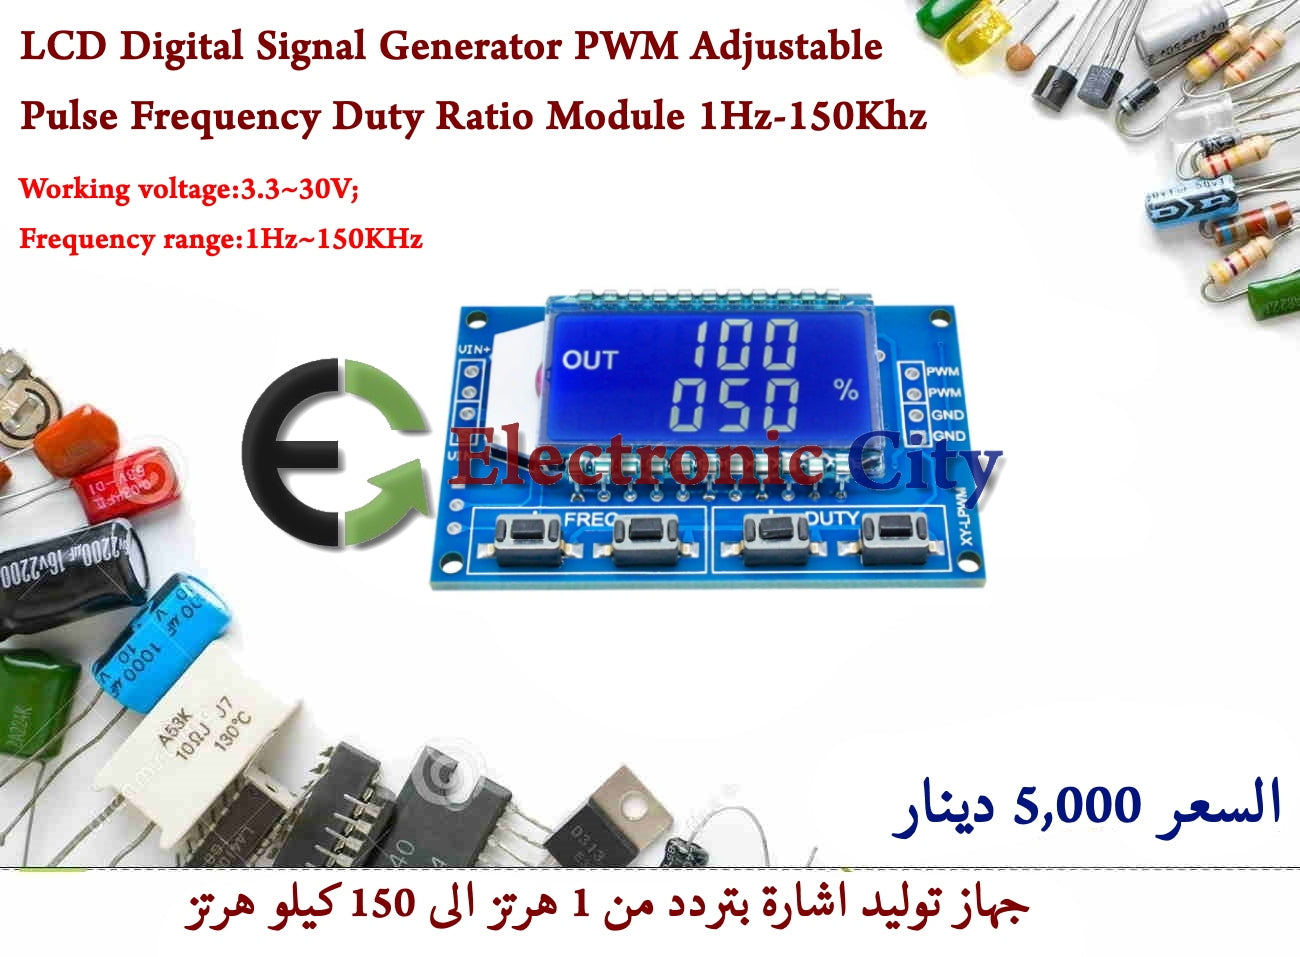 LCD Digital Signal Generator PWM Adjustable Pulse Frequency Duty Ratio Module 1Hz-150Khz #K3 011043